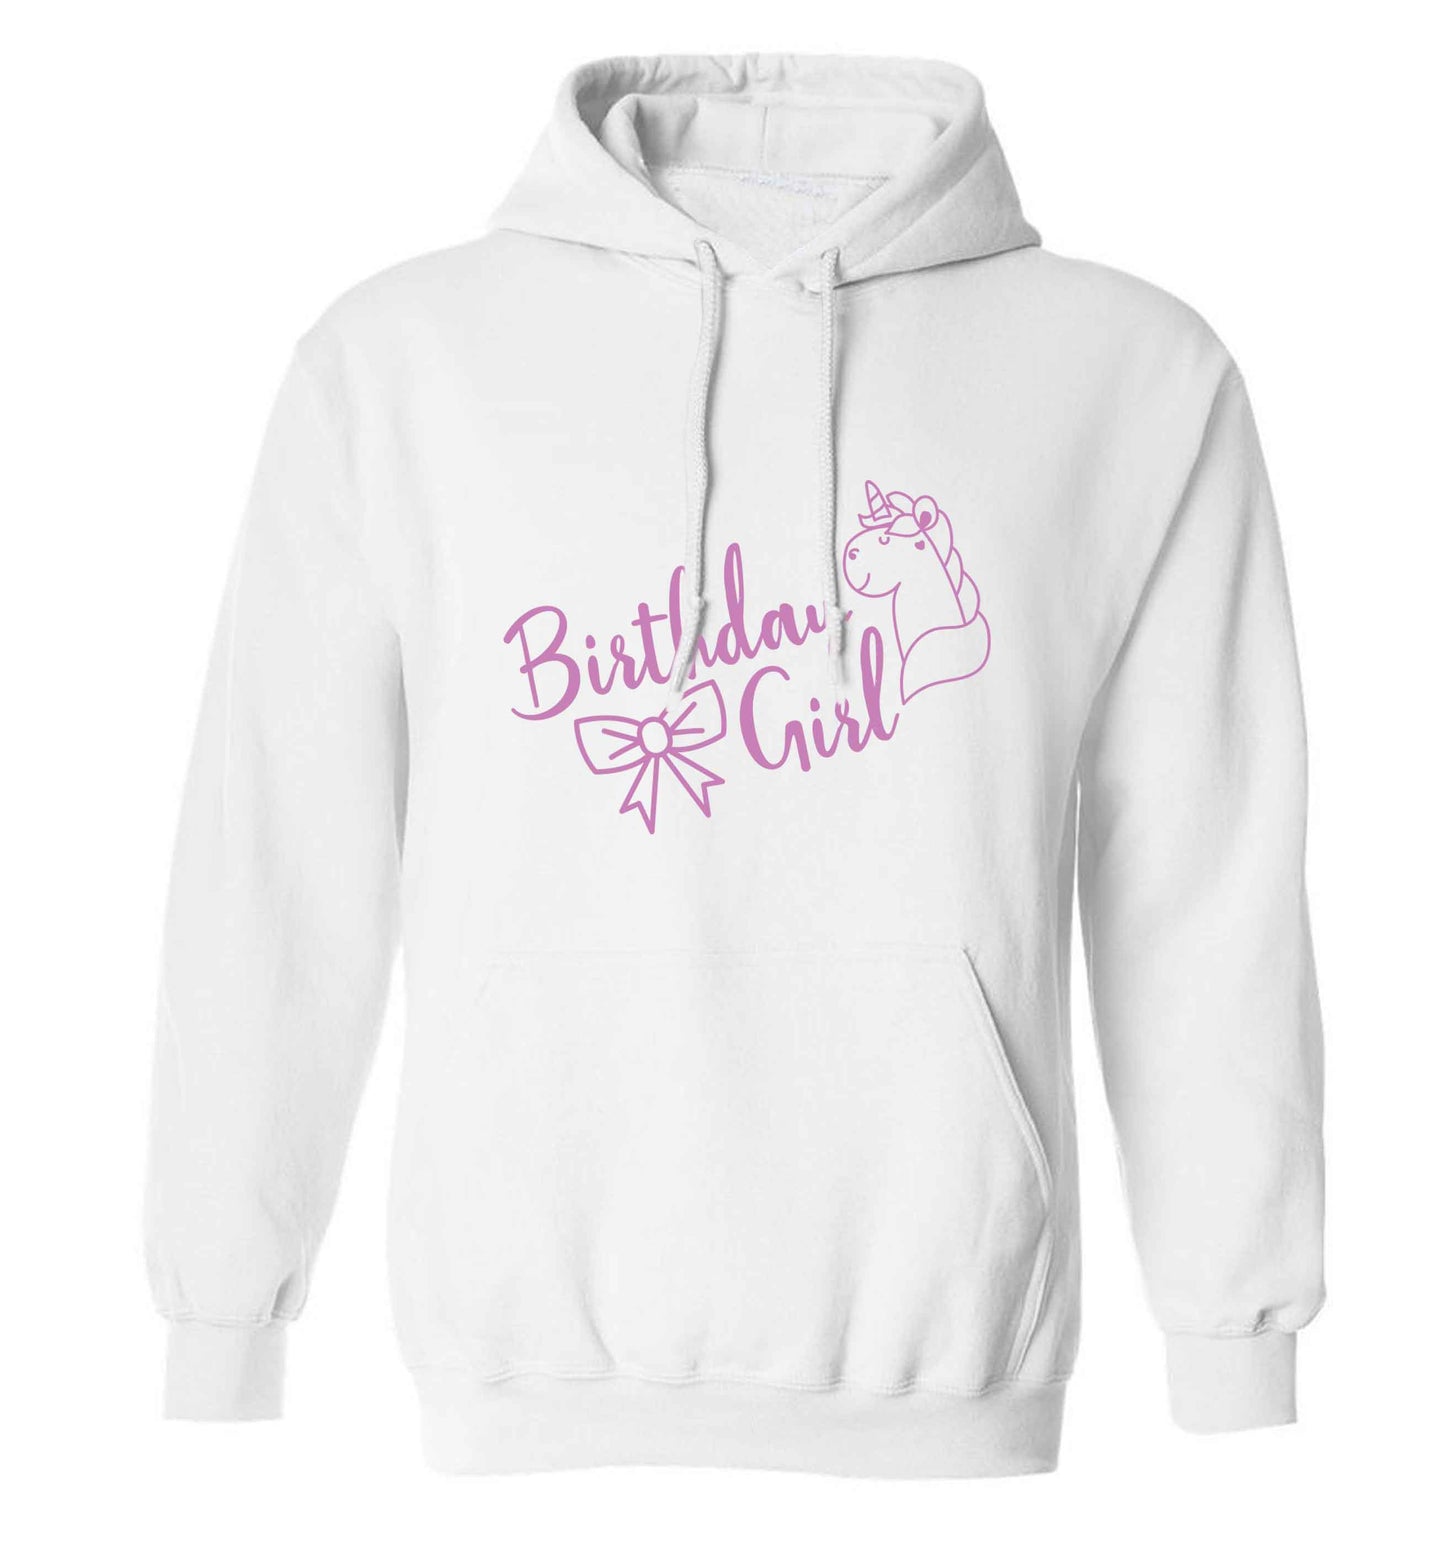 Birthday girl adults unisex white hoodie 2XL